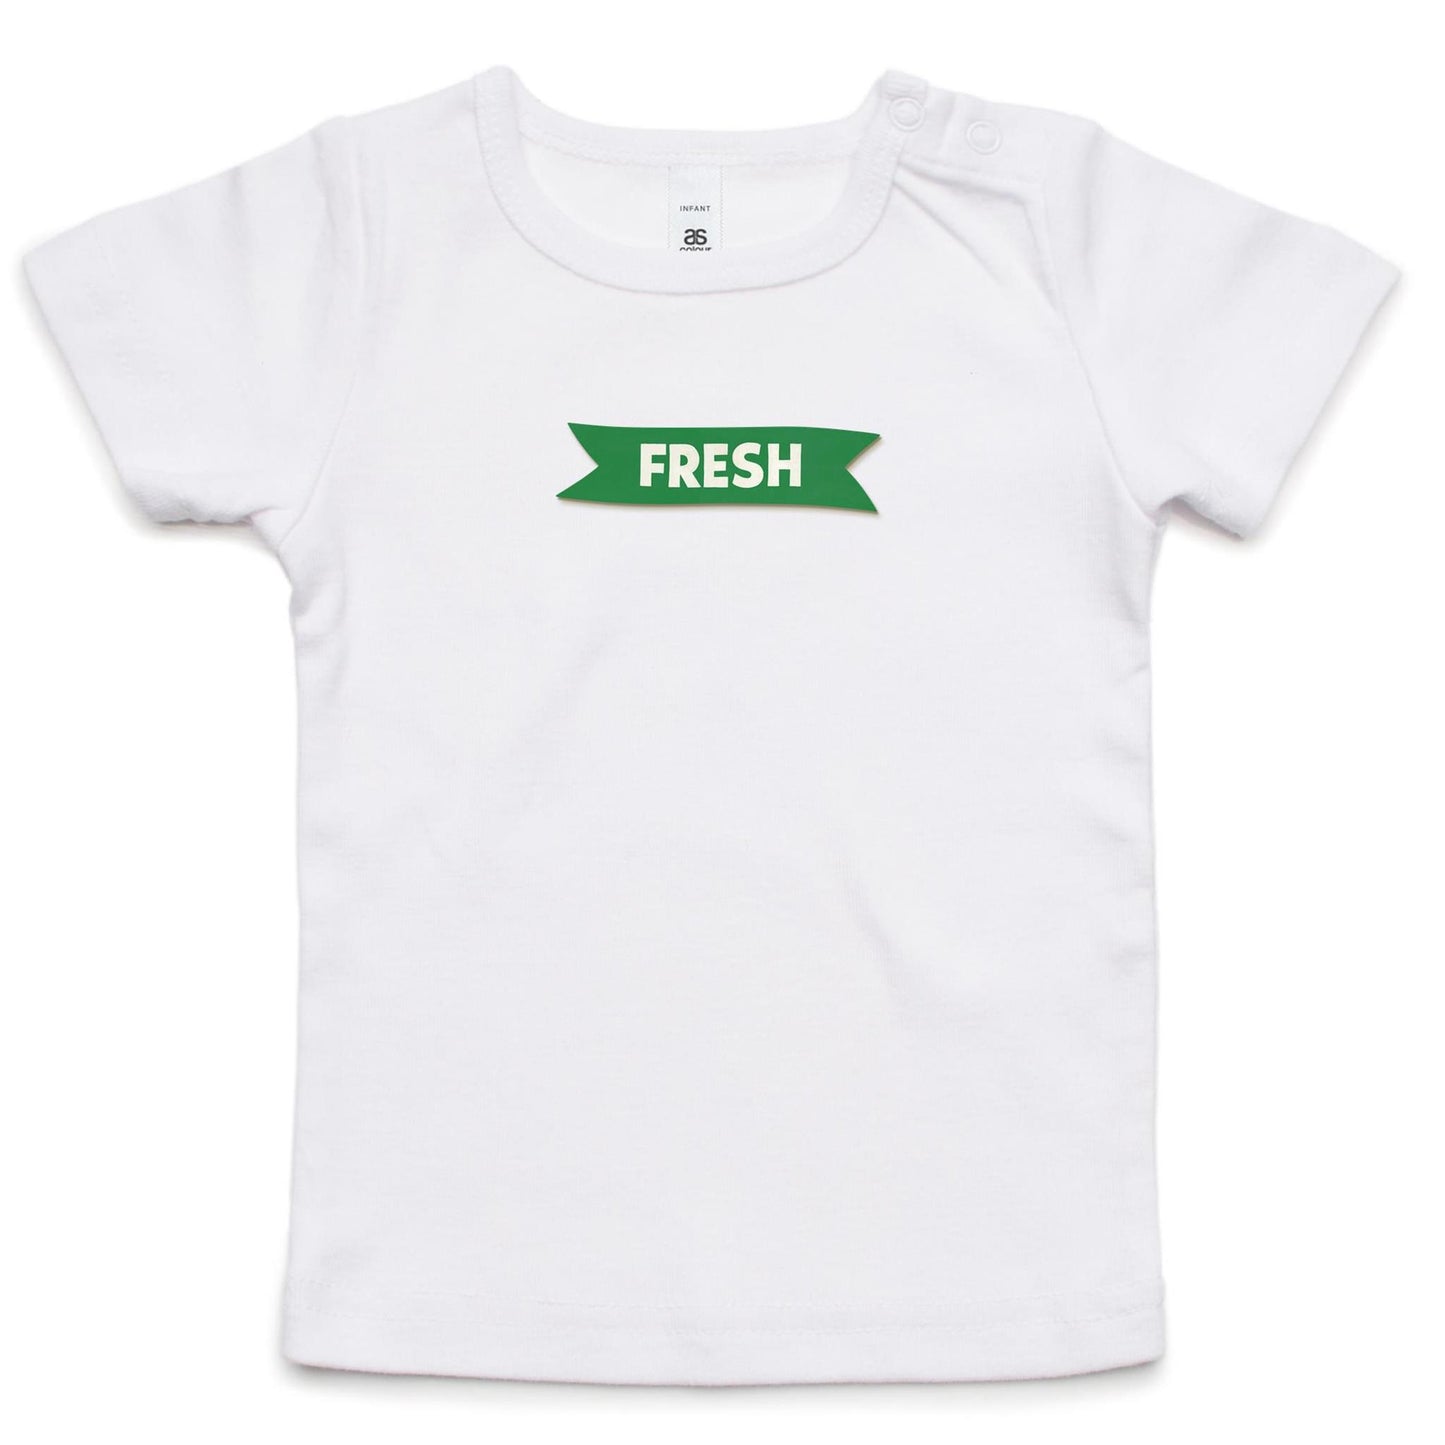 Fresh Ribbon T Shirts for Babies